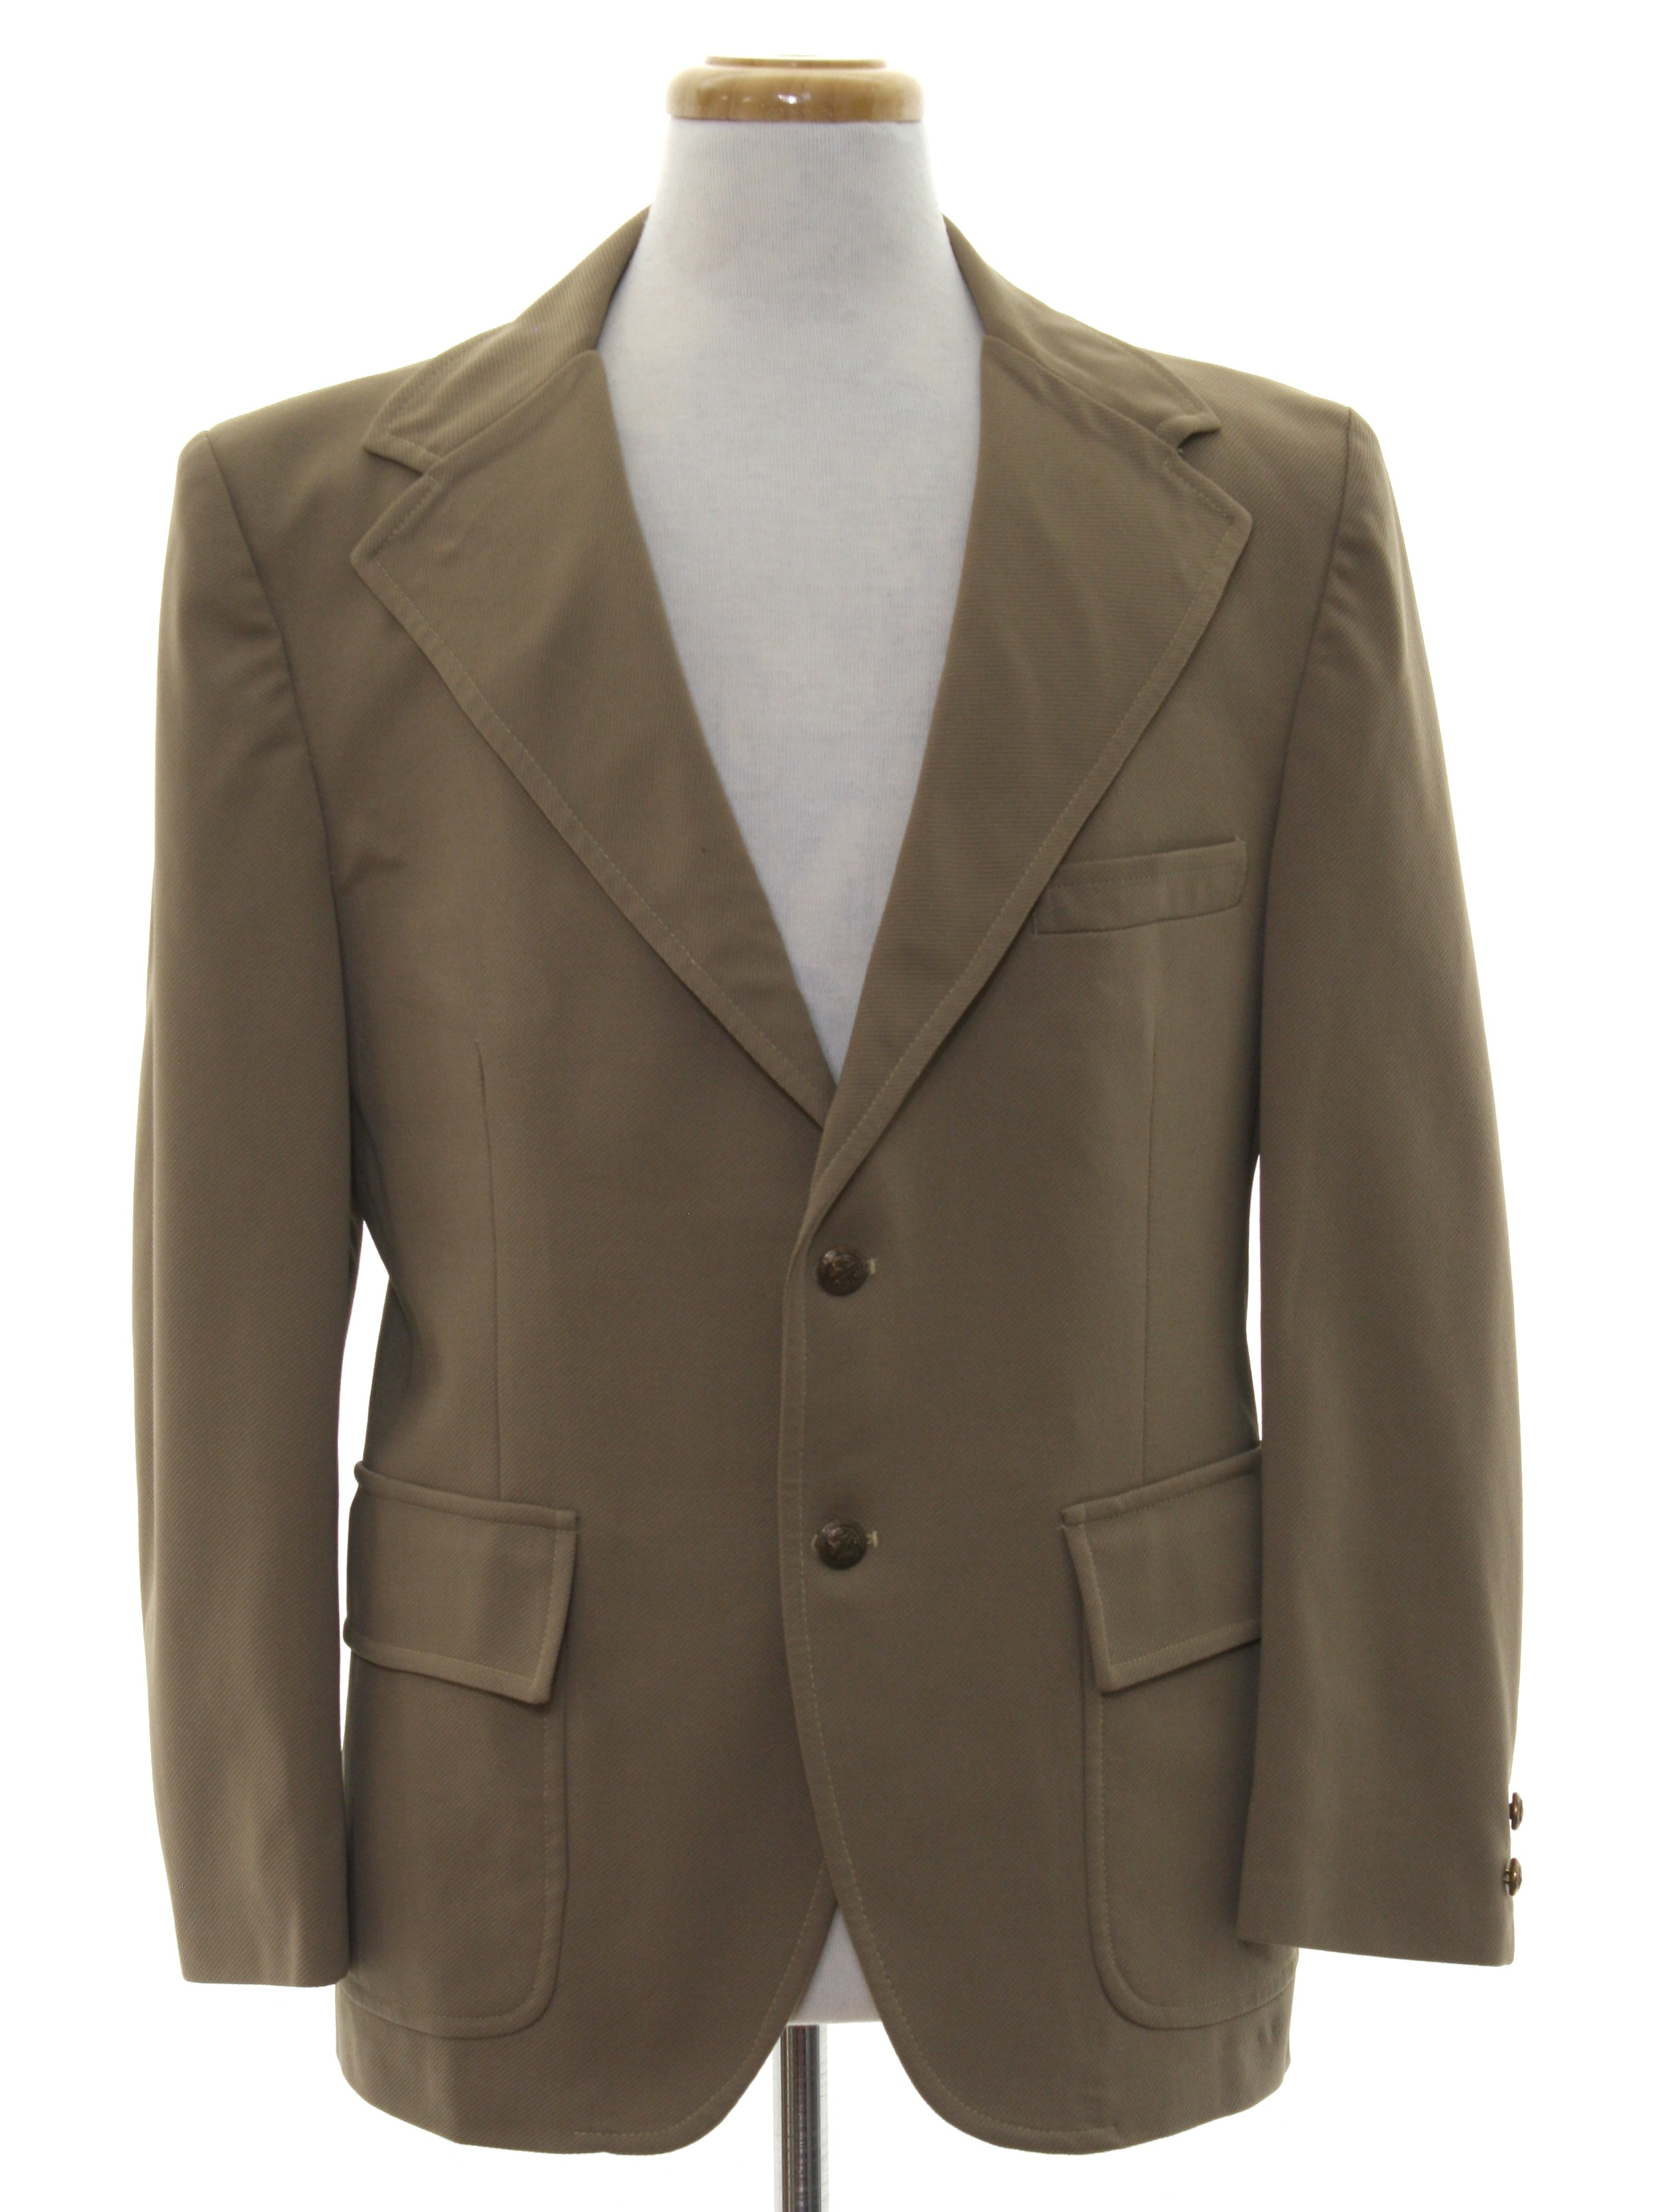 Retro 1970's Jacket (Dobbshire) : 70s -Dobbshire- Mens tan-taupe ...